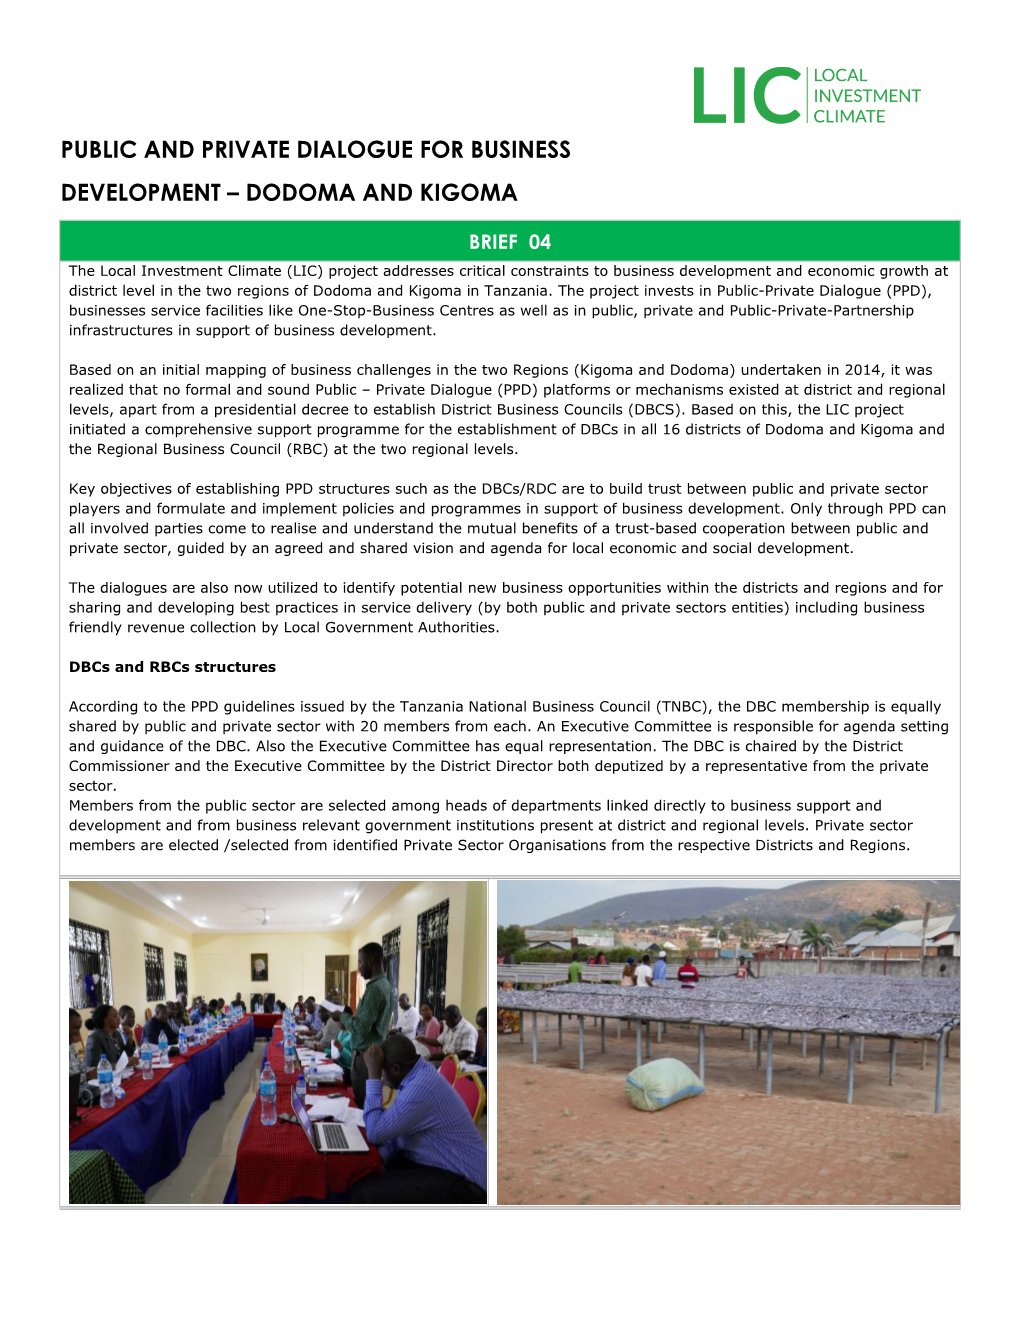 Public and Private Dialogue for Business Development – Dodoma and Kigoma